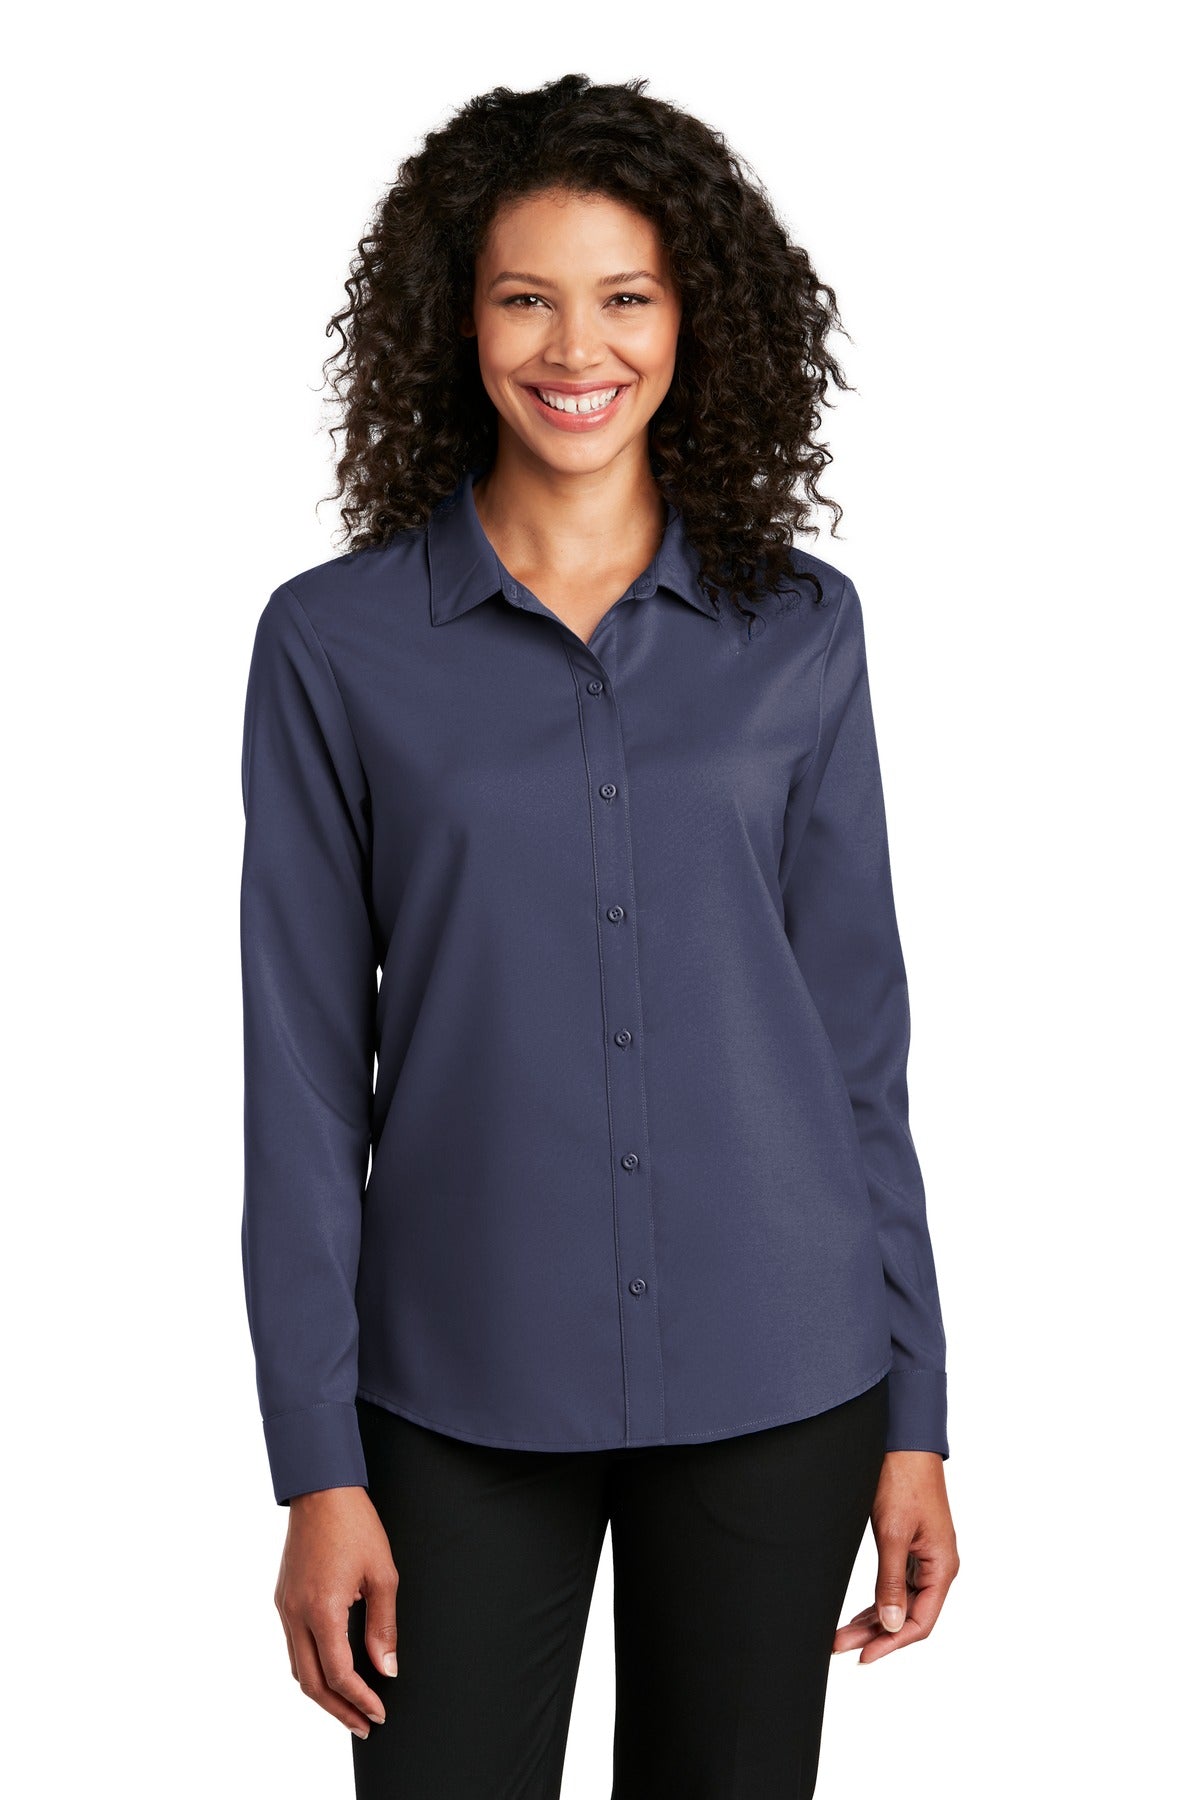 Port Authority Ladies Long Sleeve Performance Staff Shirt LW401